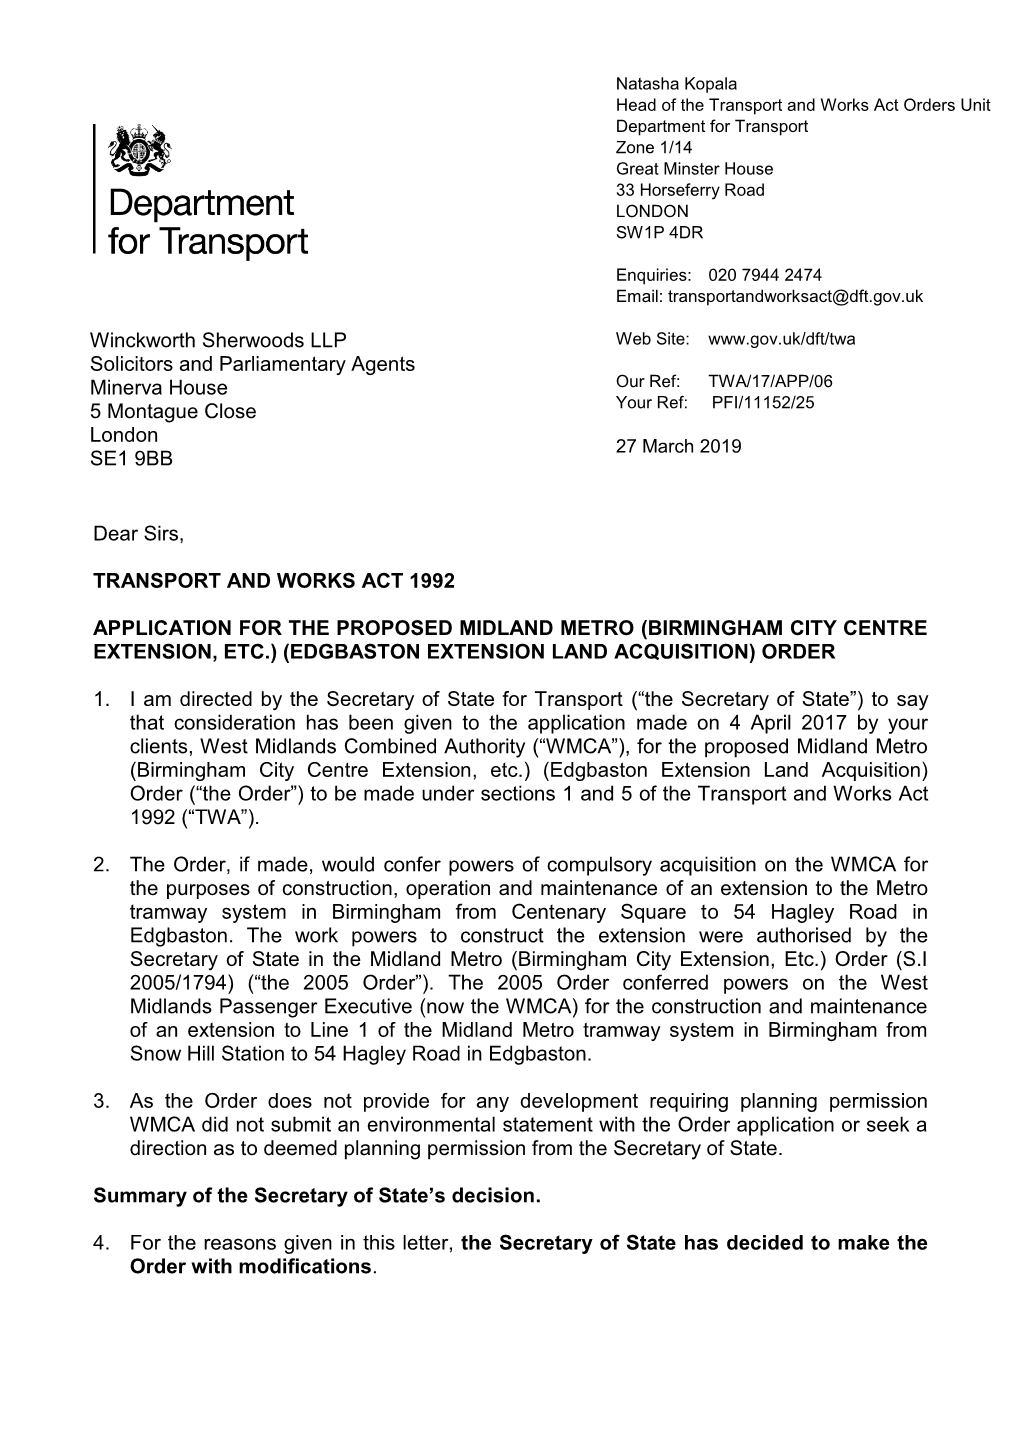 Application for Proposed Midland Metro Birmingham City Centre